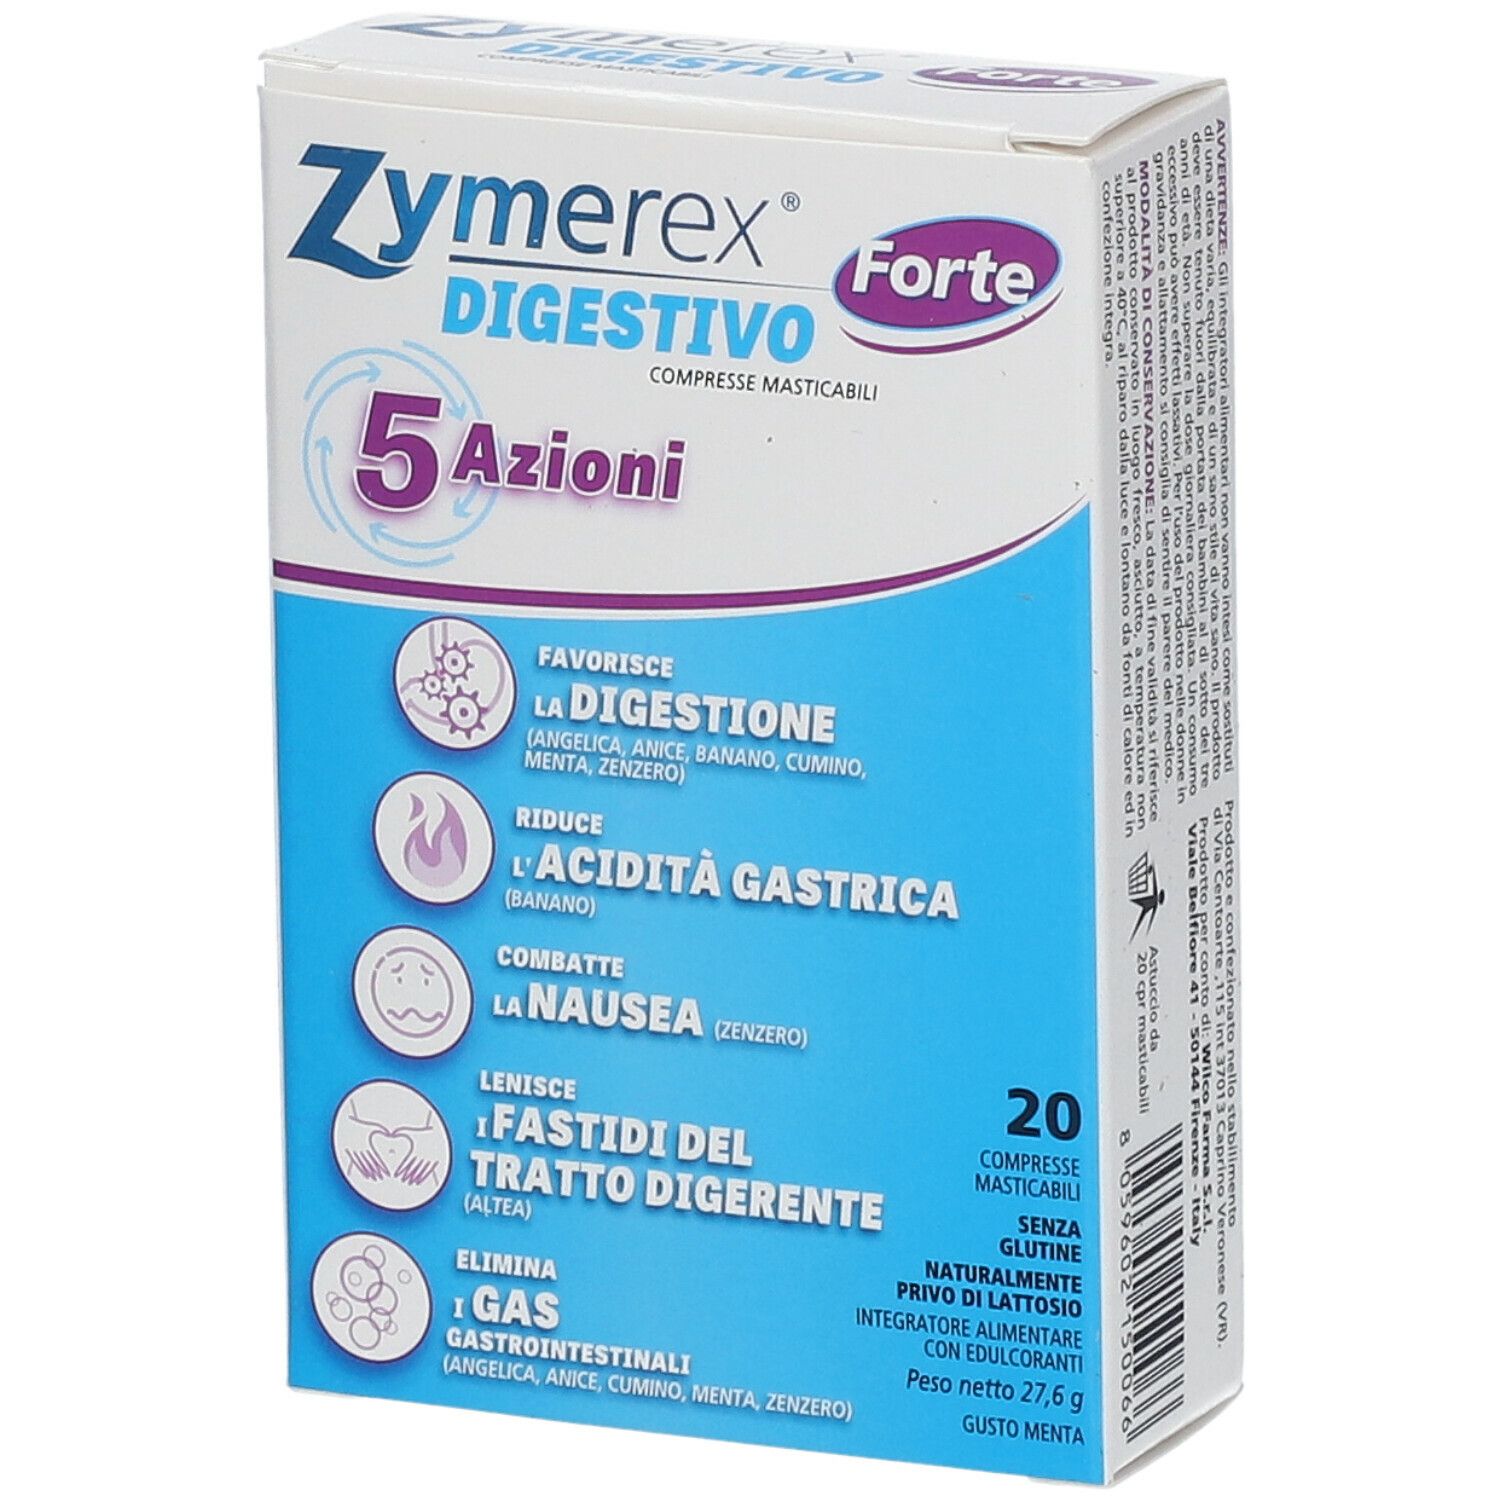 Zymerex® Digestivo Forte Compresse Masticabili 5 Azioni